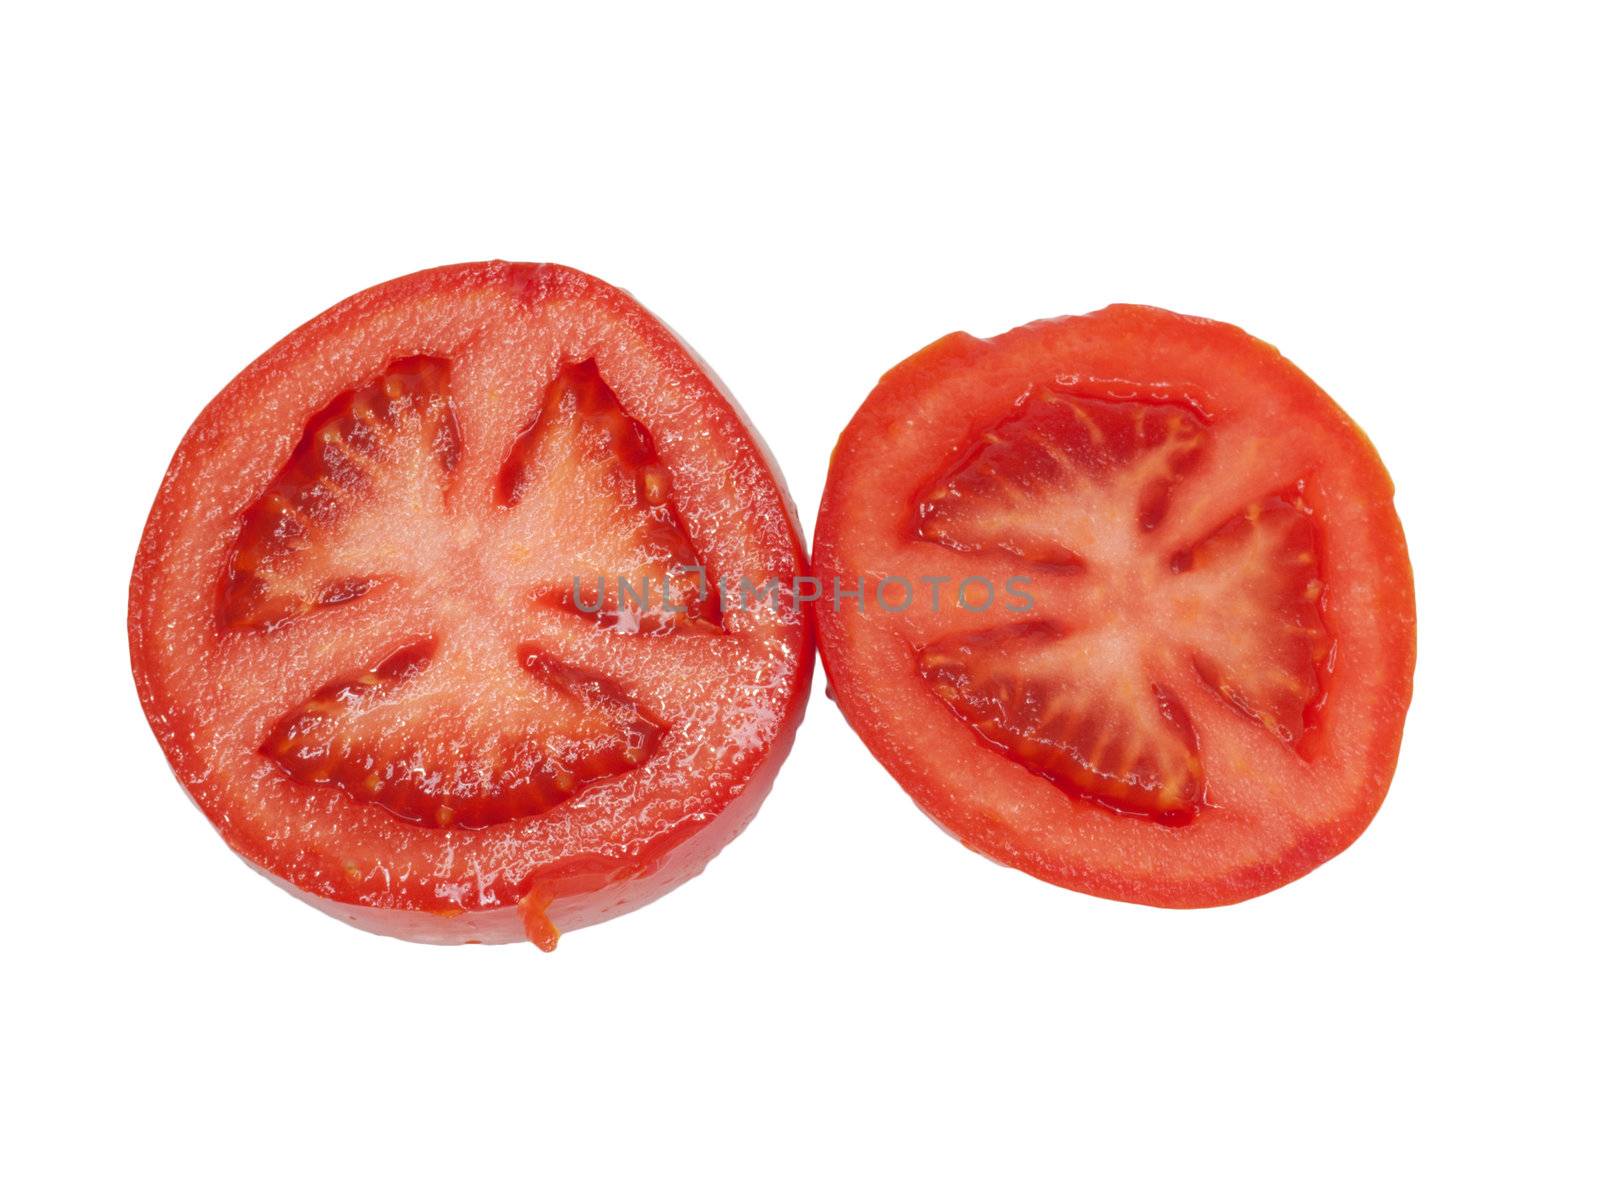 fresh ripe tomato isolated on white background  by schankz